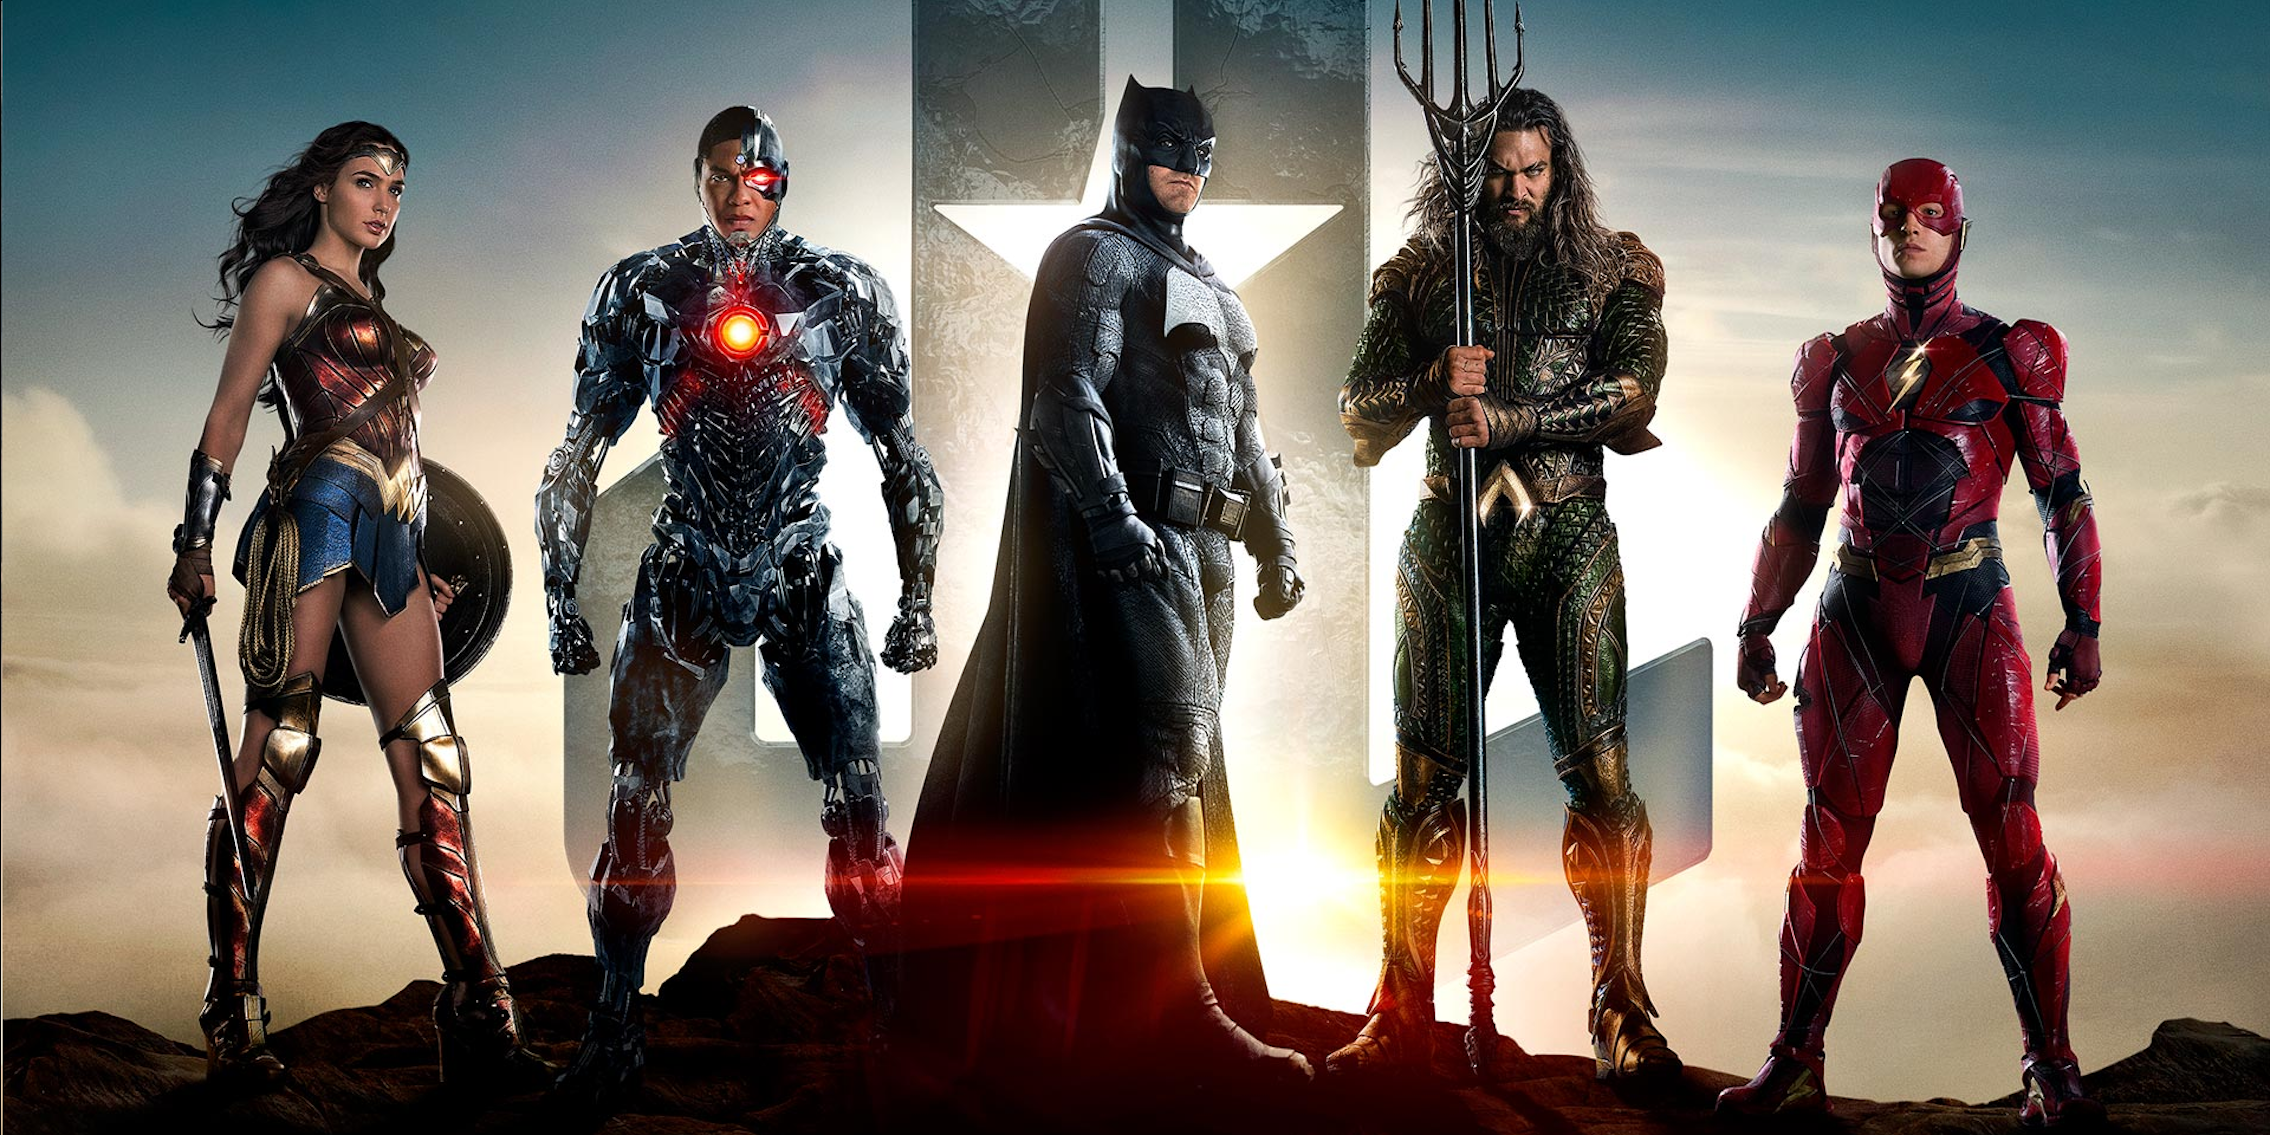 X-Men' Director Brett Ratner Is Right: Rotten Tomatoes Is Ruining Movies